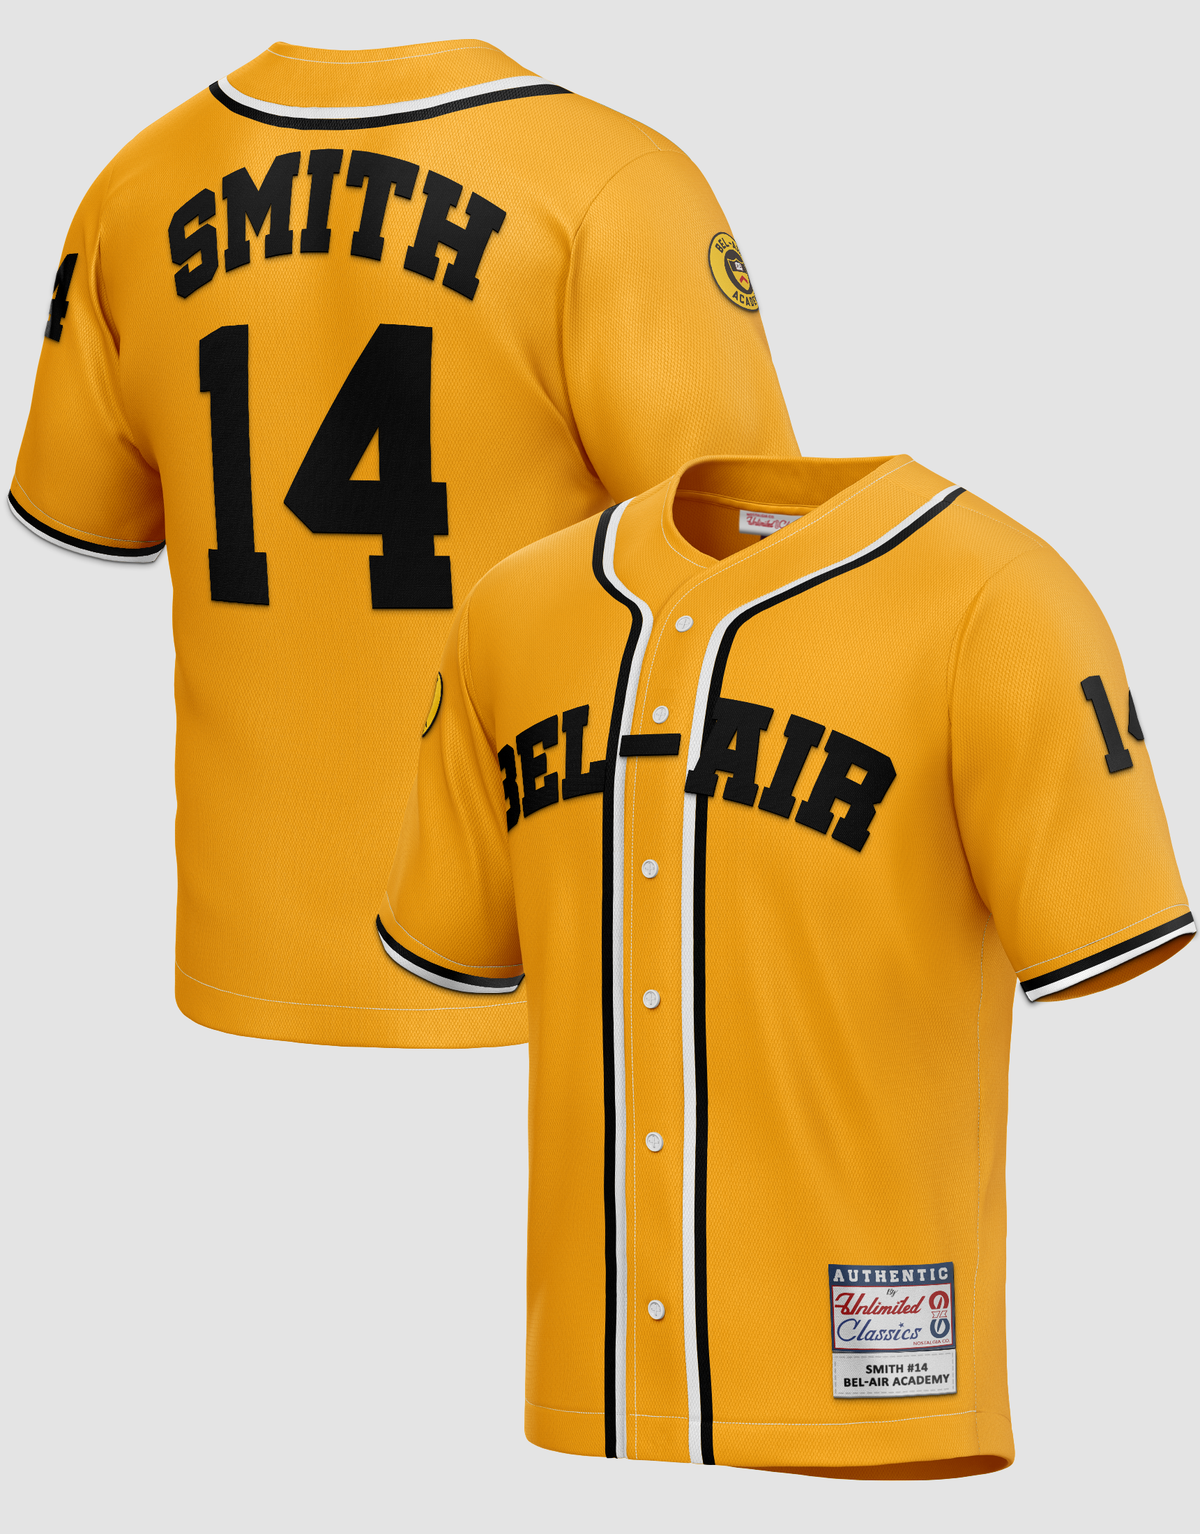 Will Smith #14 Bel-Air Academy Baseball Jersey